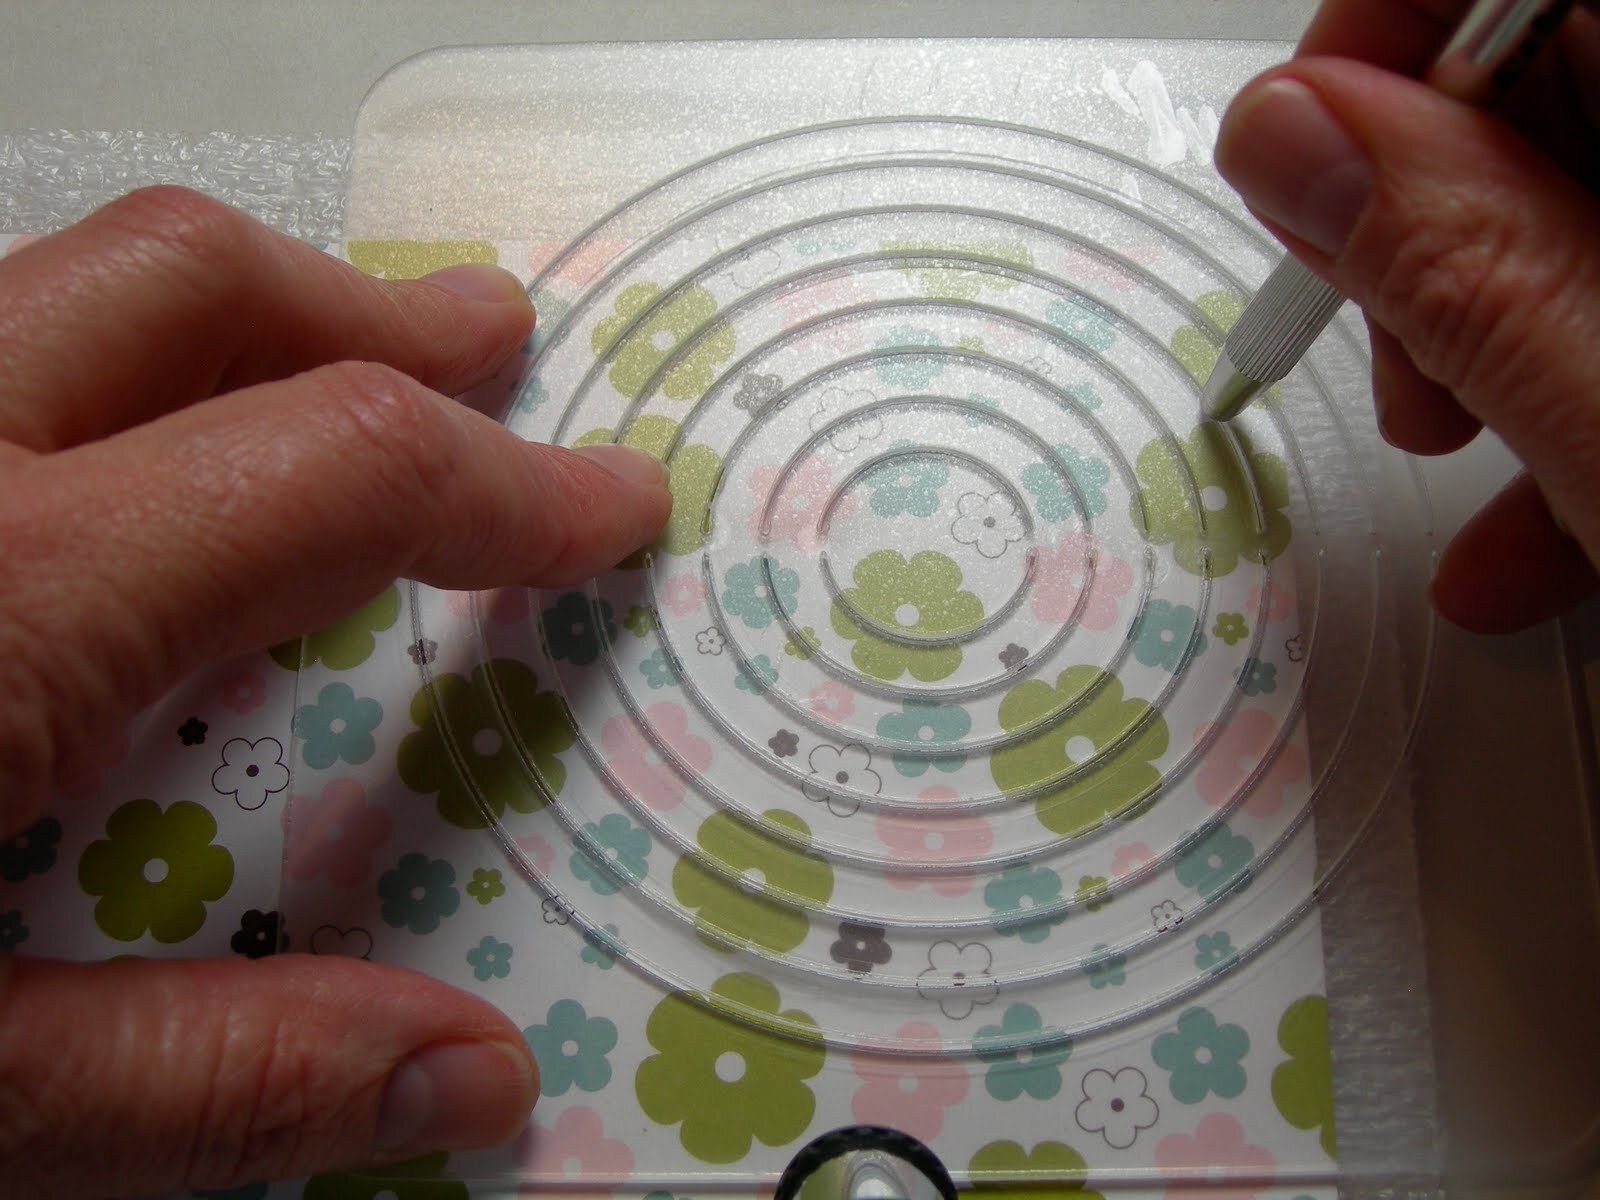 Vaessen Creative - Circle cutter and self-adhesive cutting mat, Papero amo